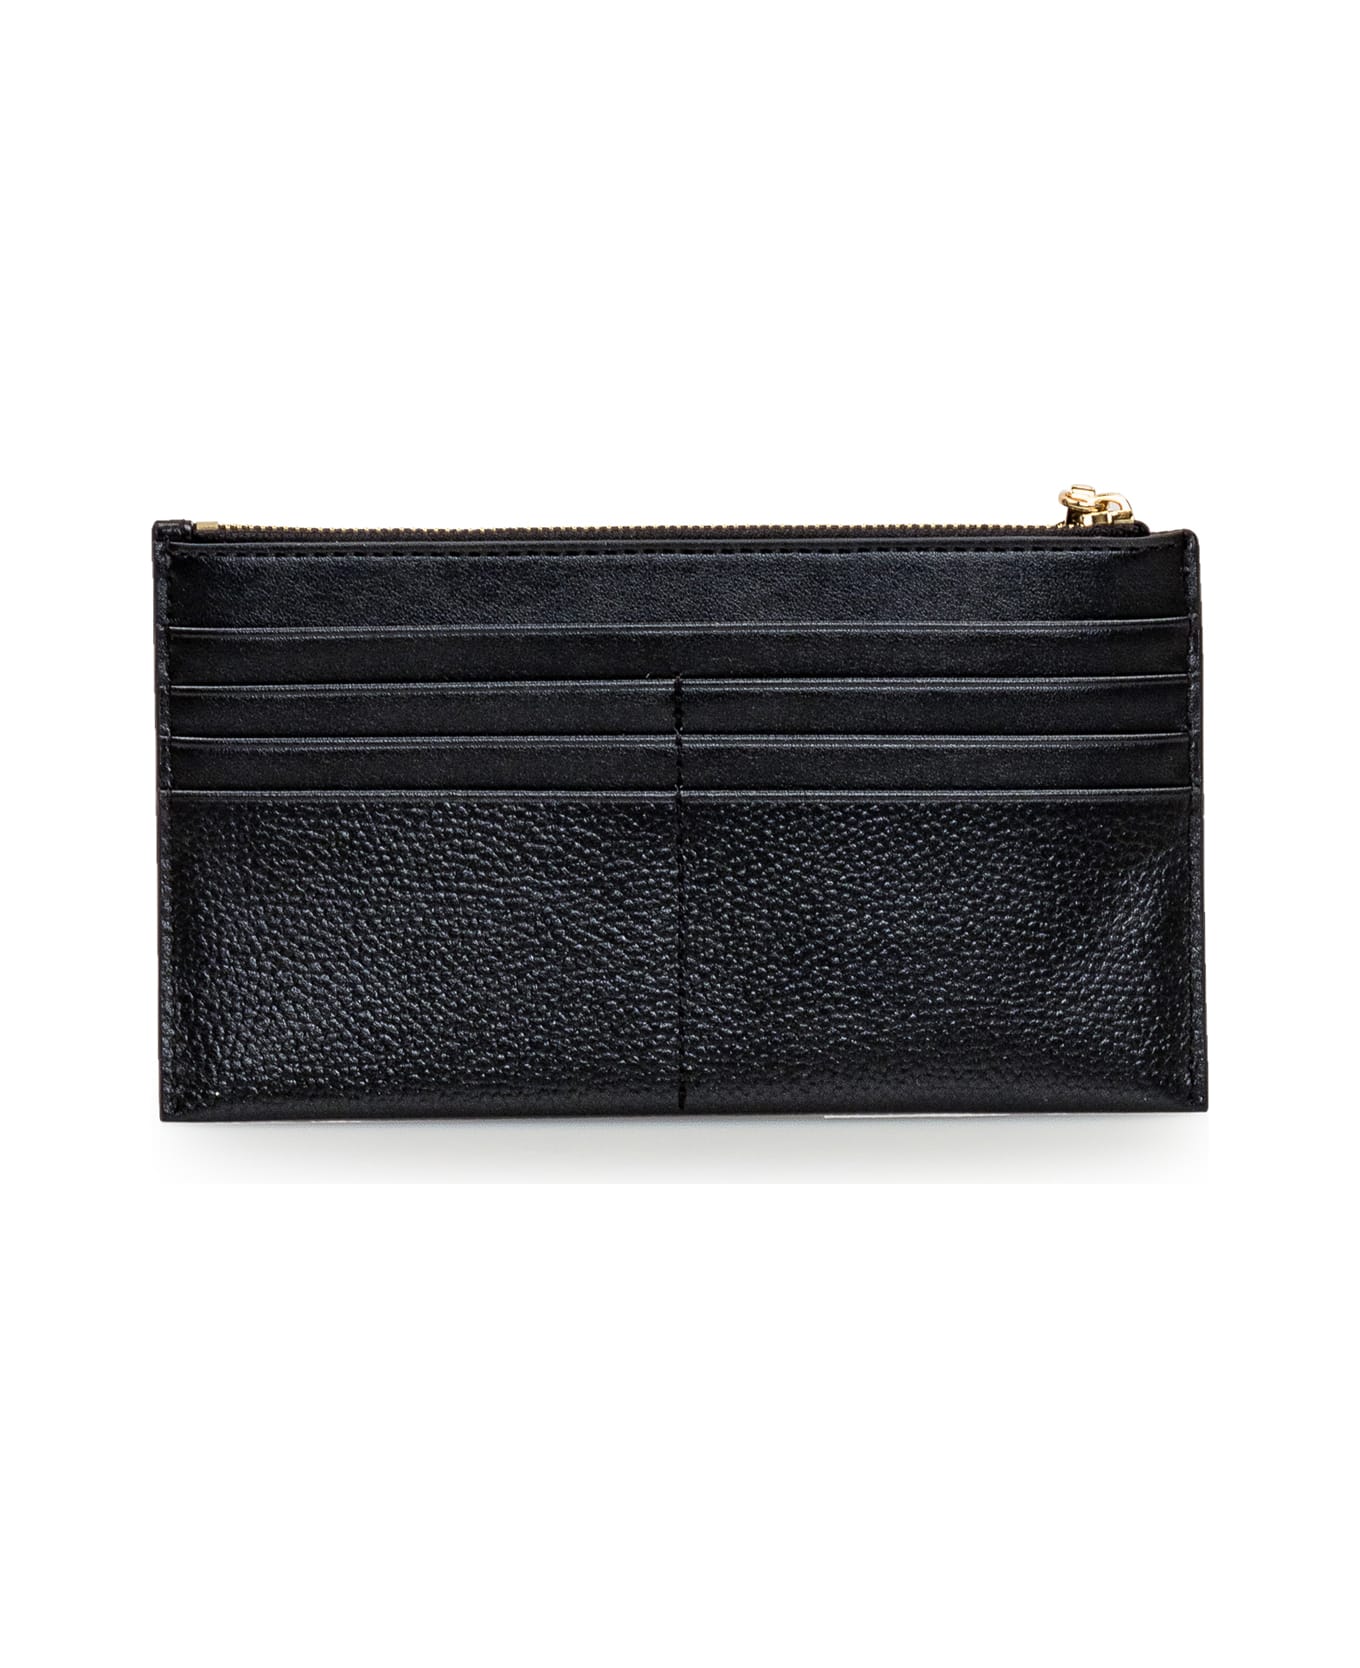 Michael Kors Collection Wallet - Black